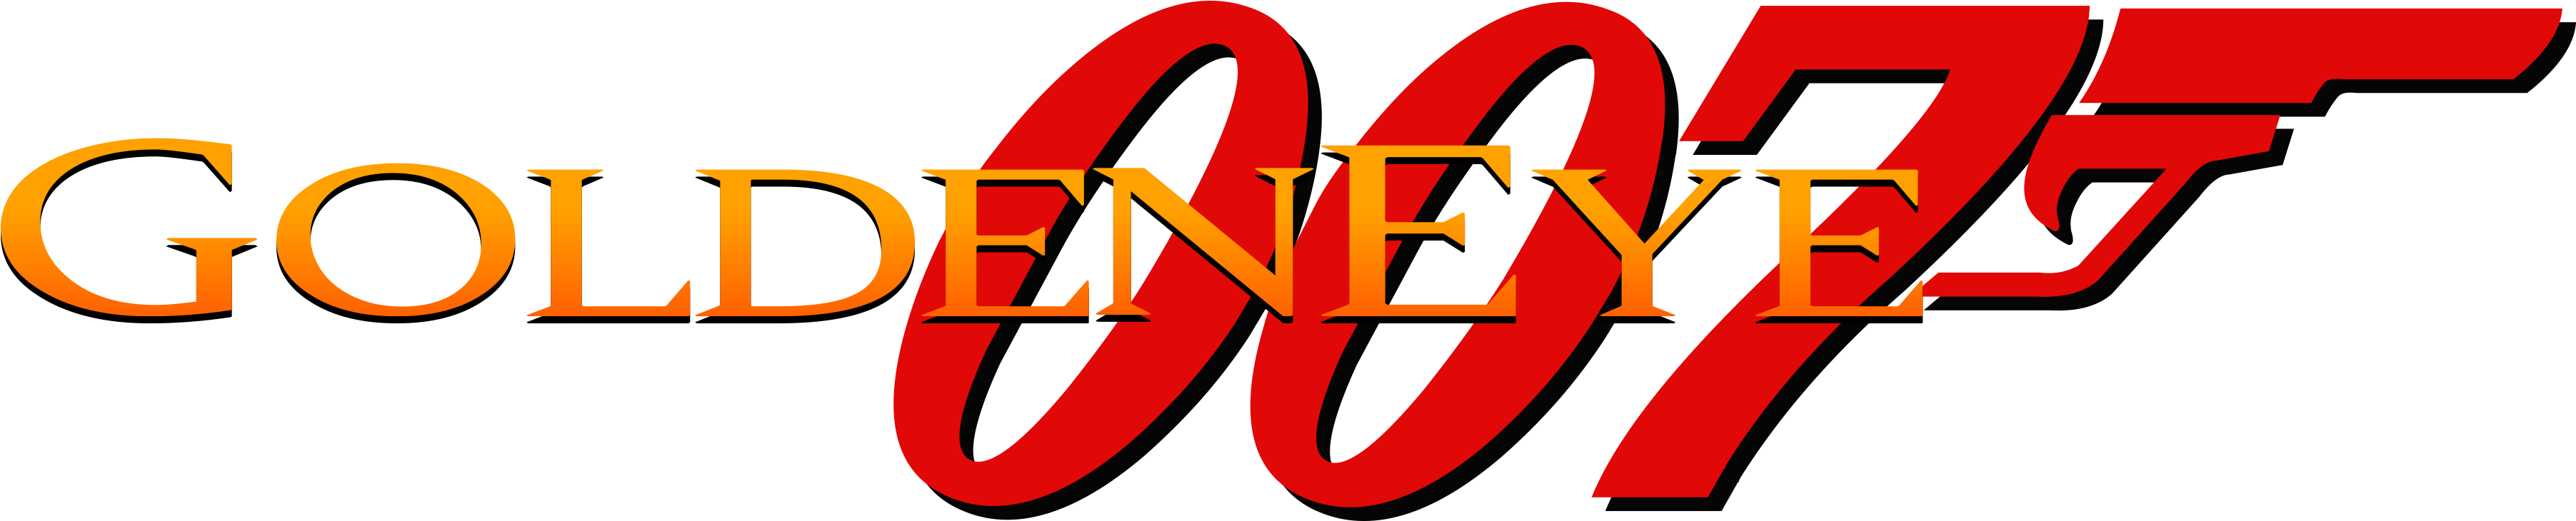 GoldenEye 007 Logo Free PNG Clip Art